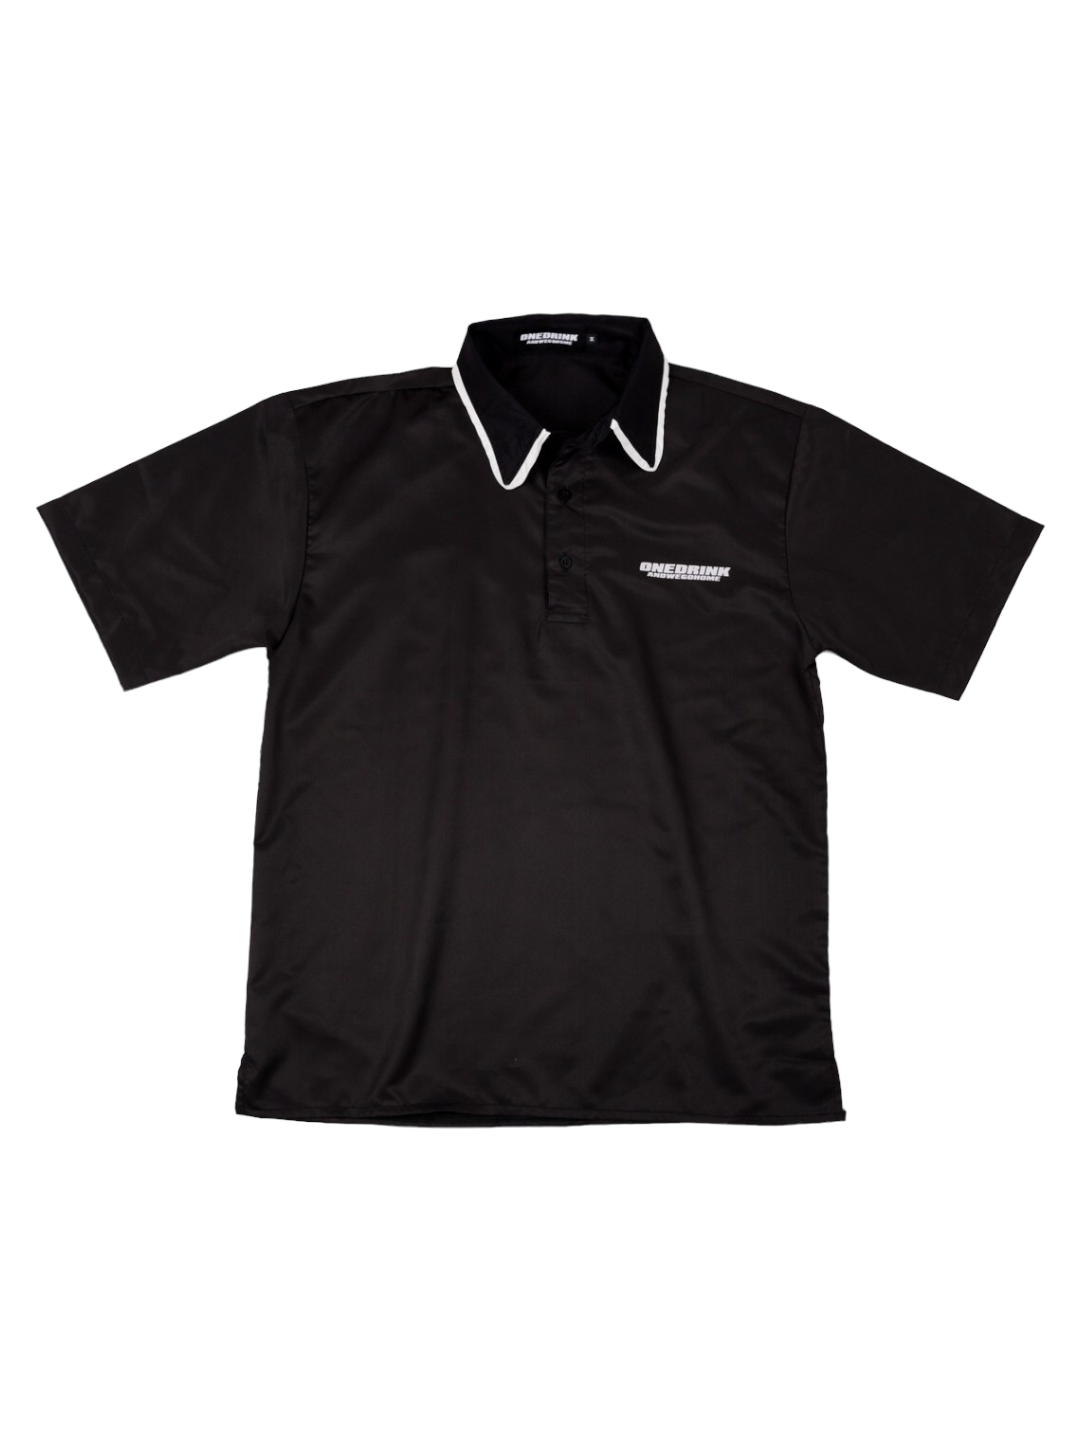 Micro fiber Shirt (Black)